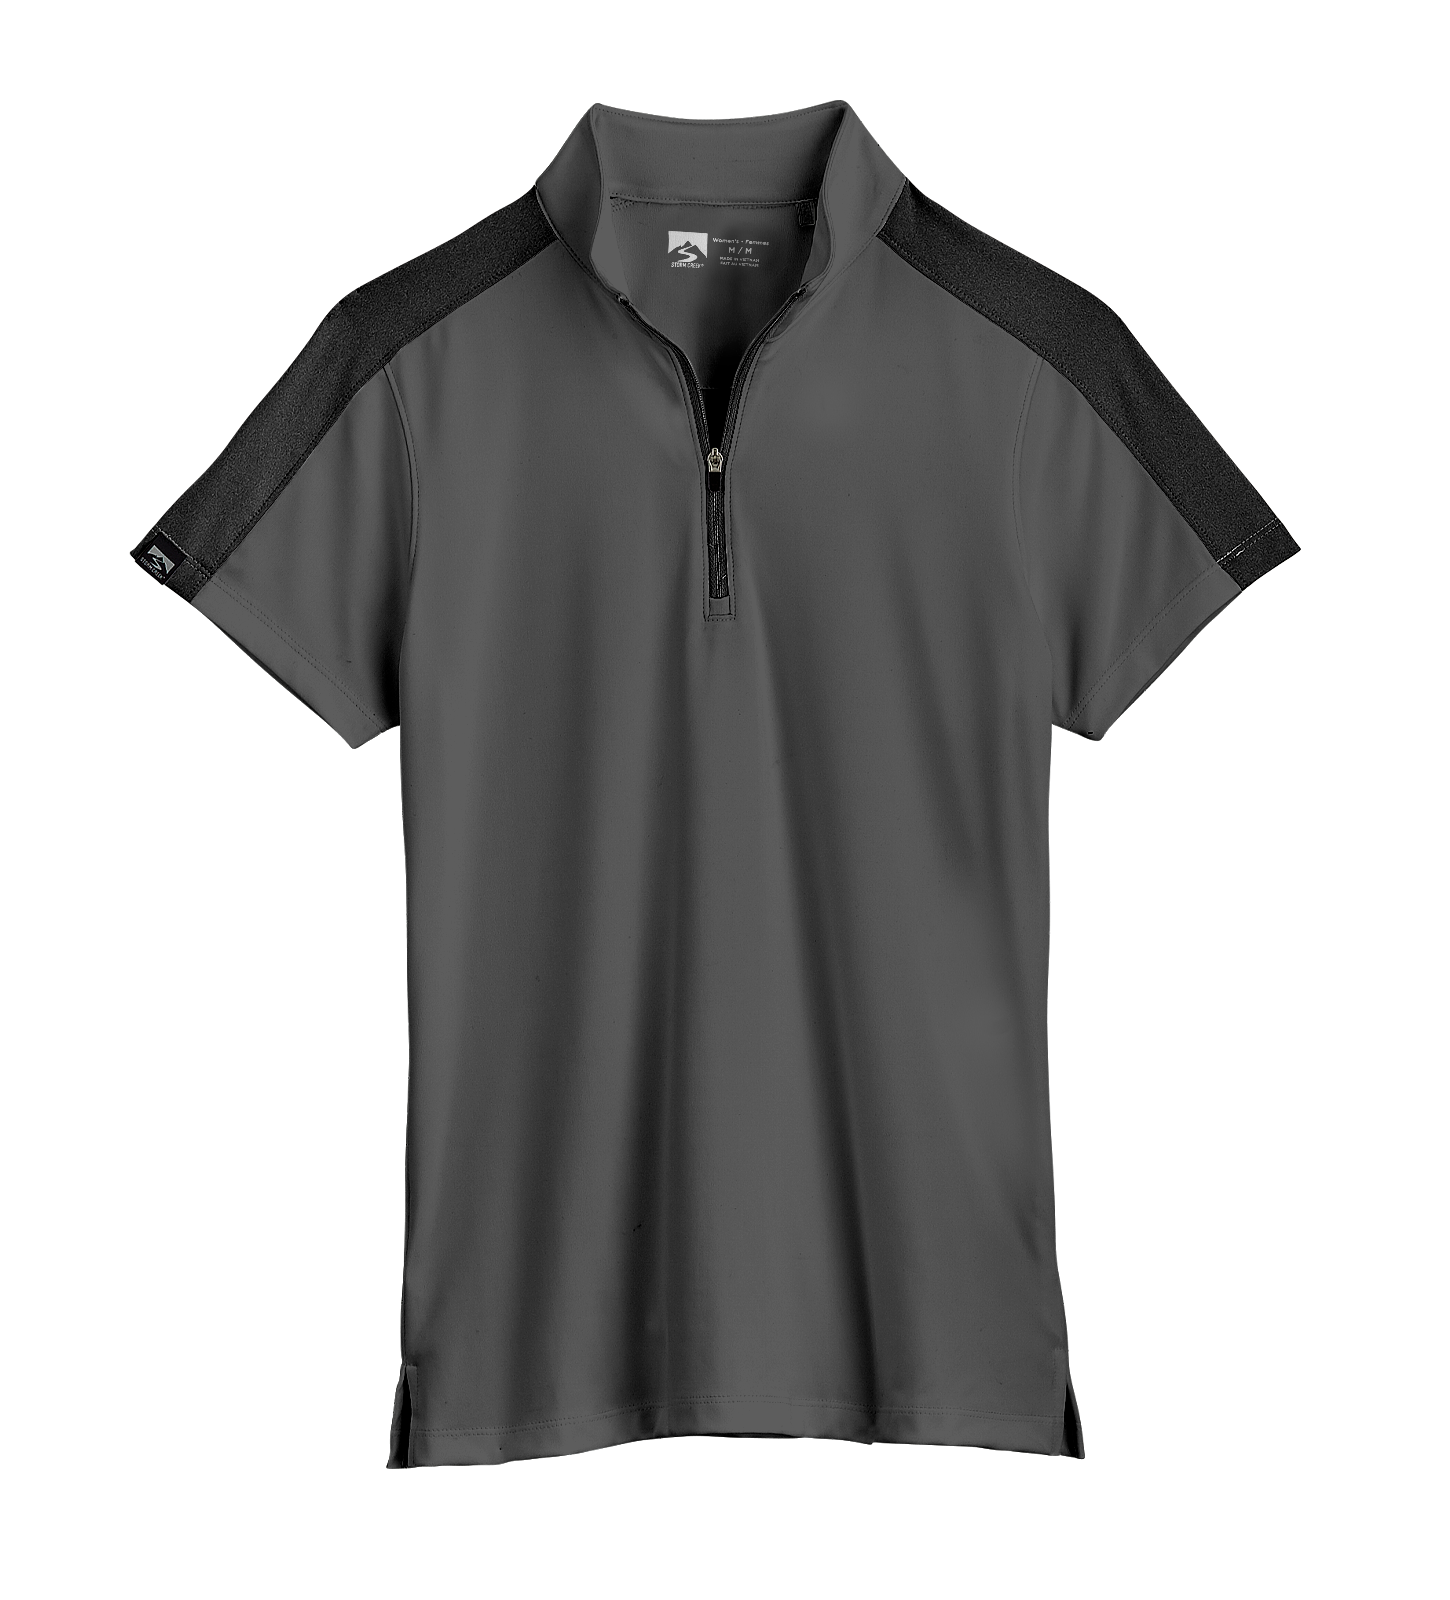 Storm Creek Activator Short-Sleeve Polo Shirt for Ladies - Dark Heather Gray/Black - XS